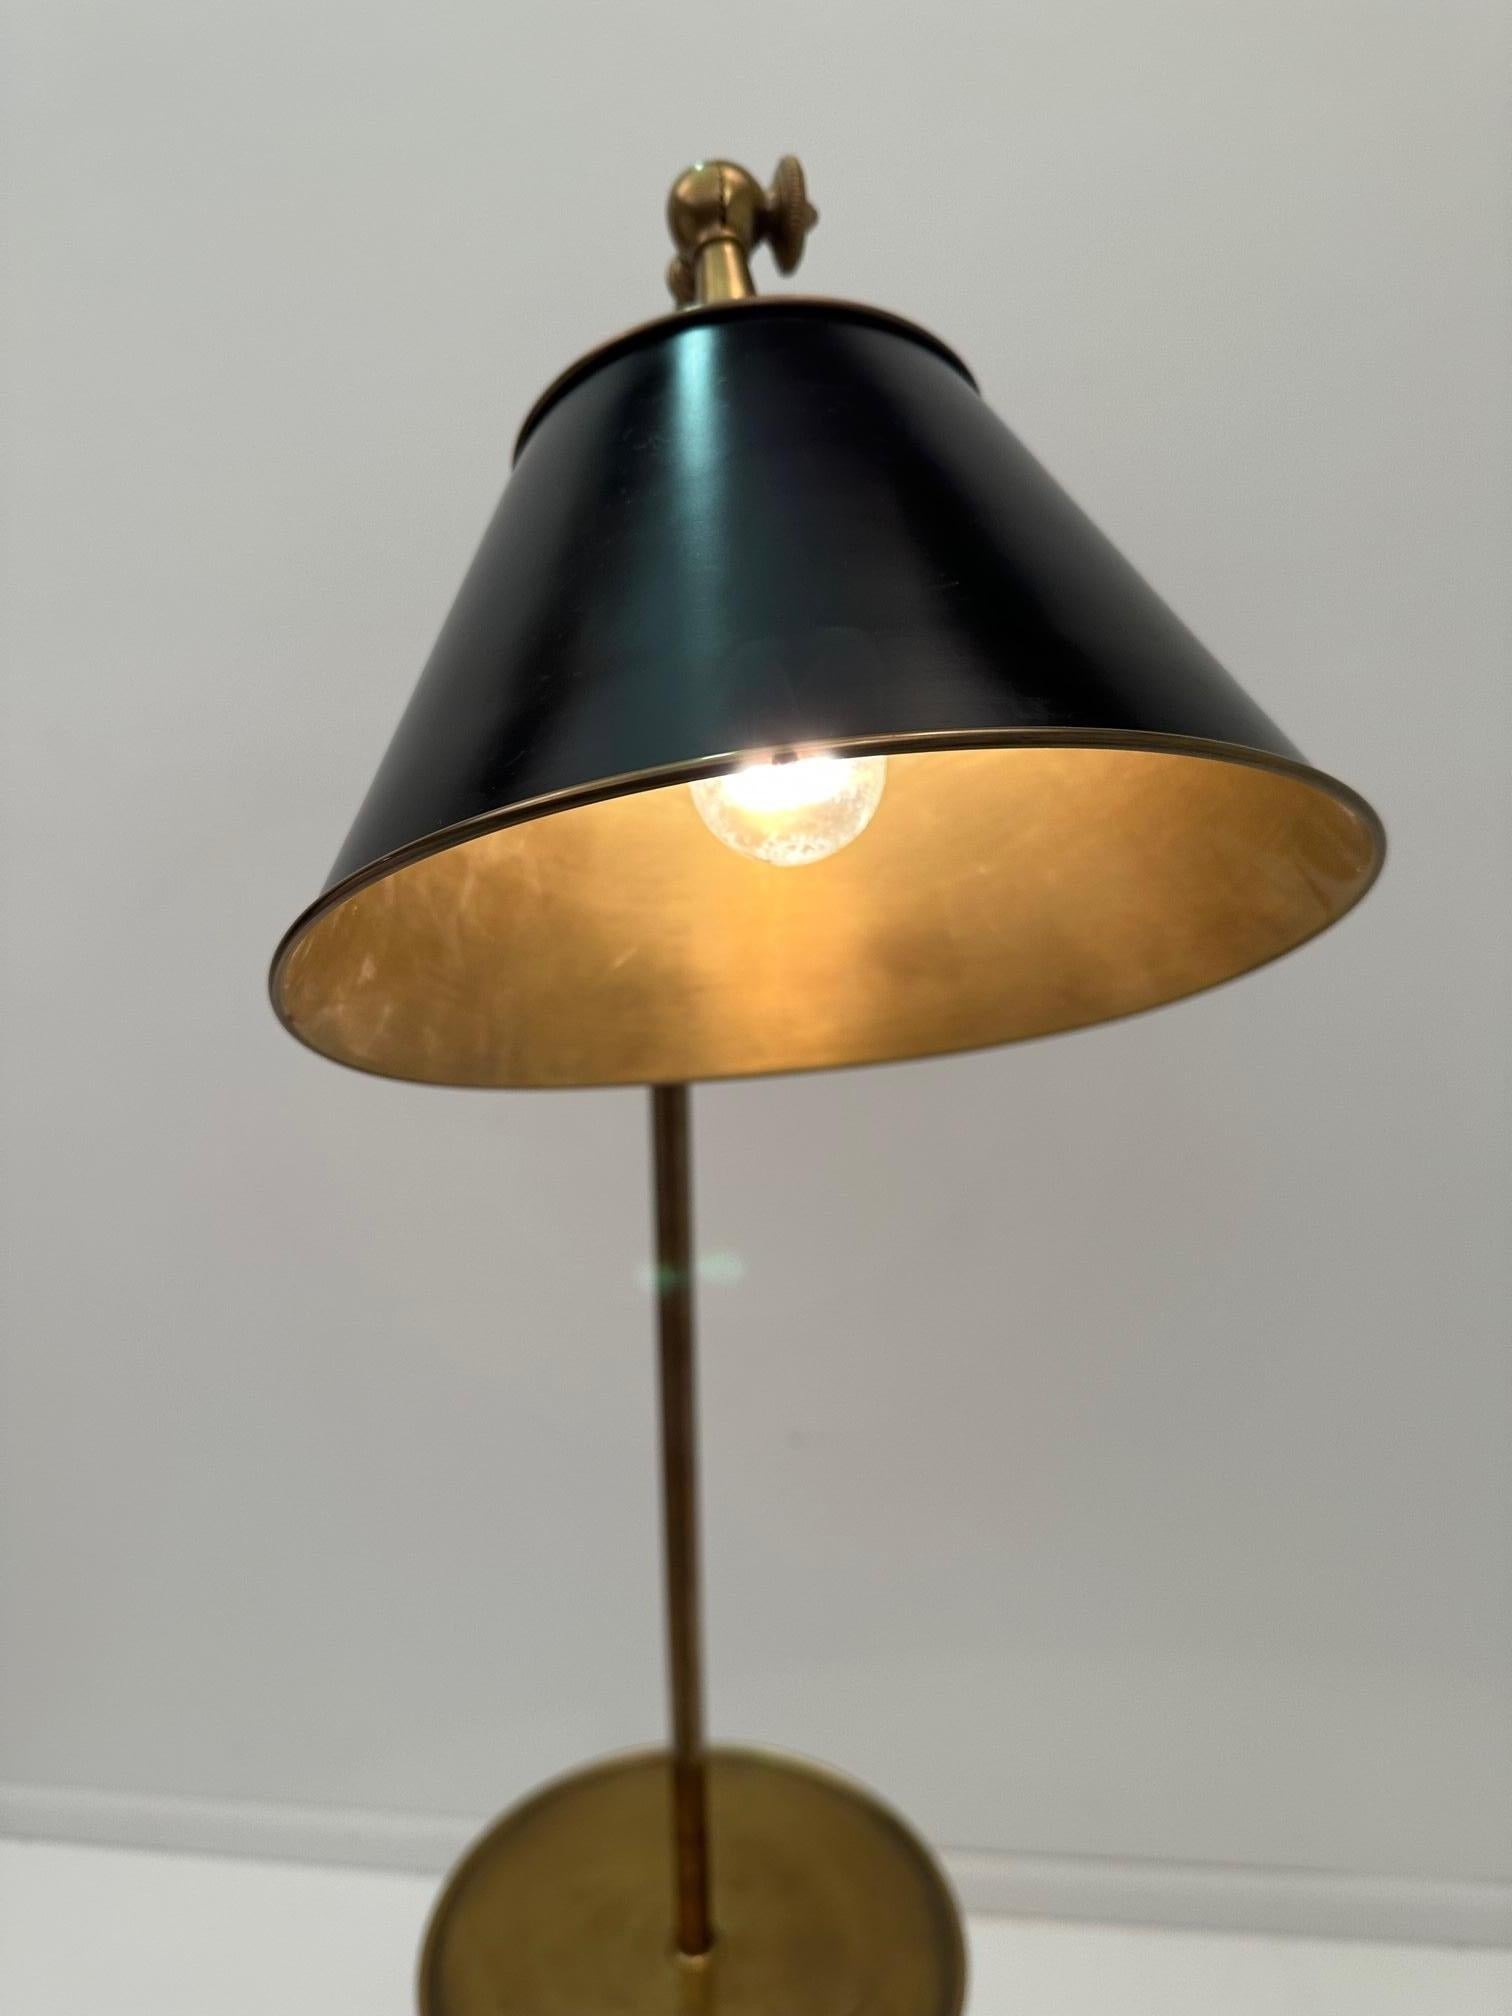 American Stunning Chapman Brass Floor Lamp with Adjustable Shade